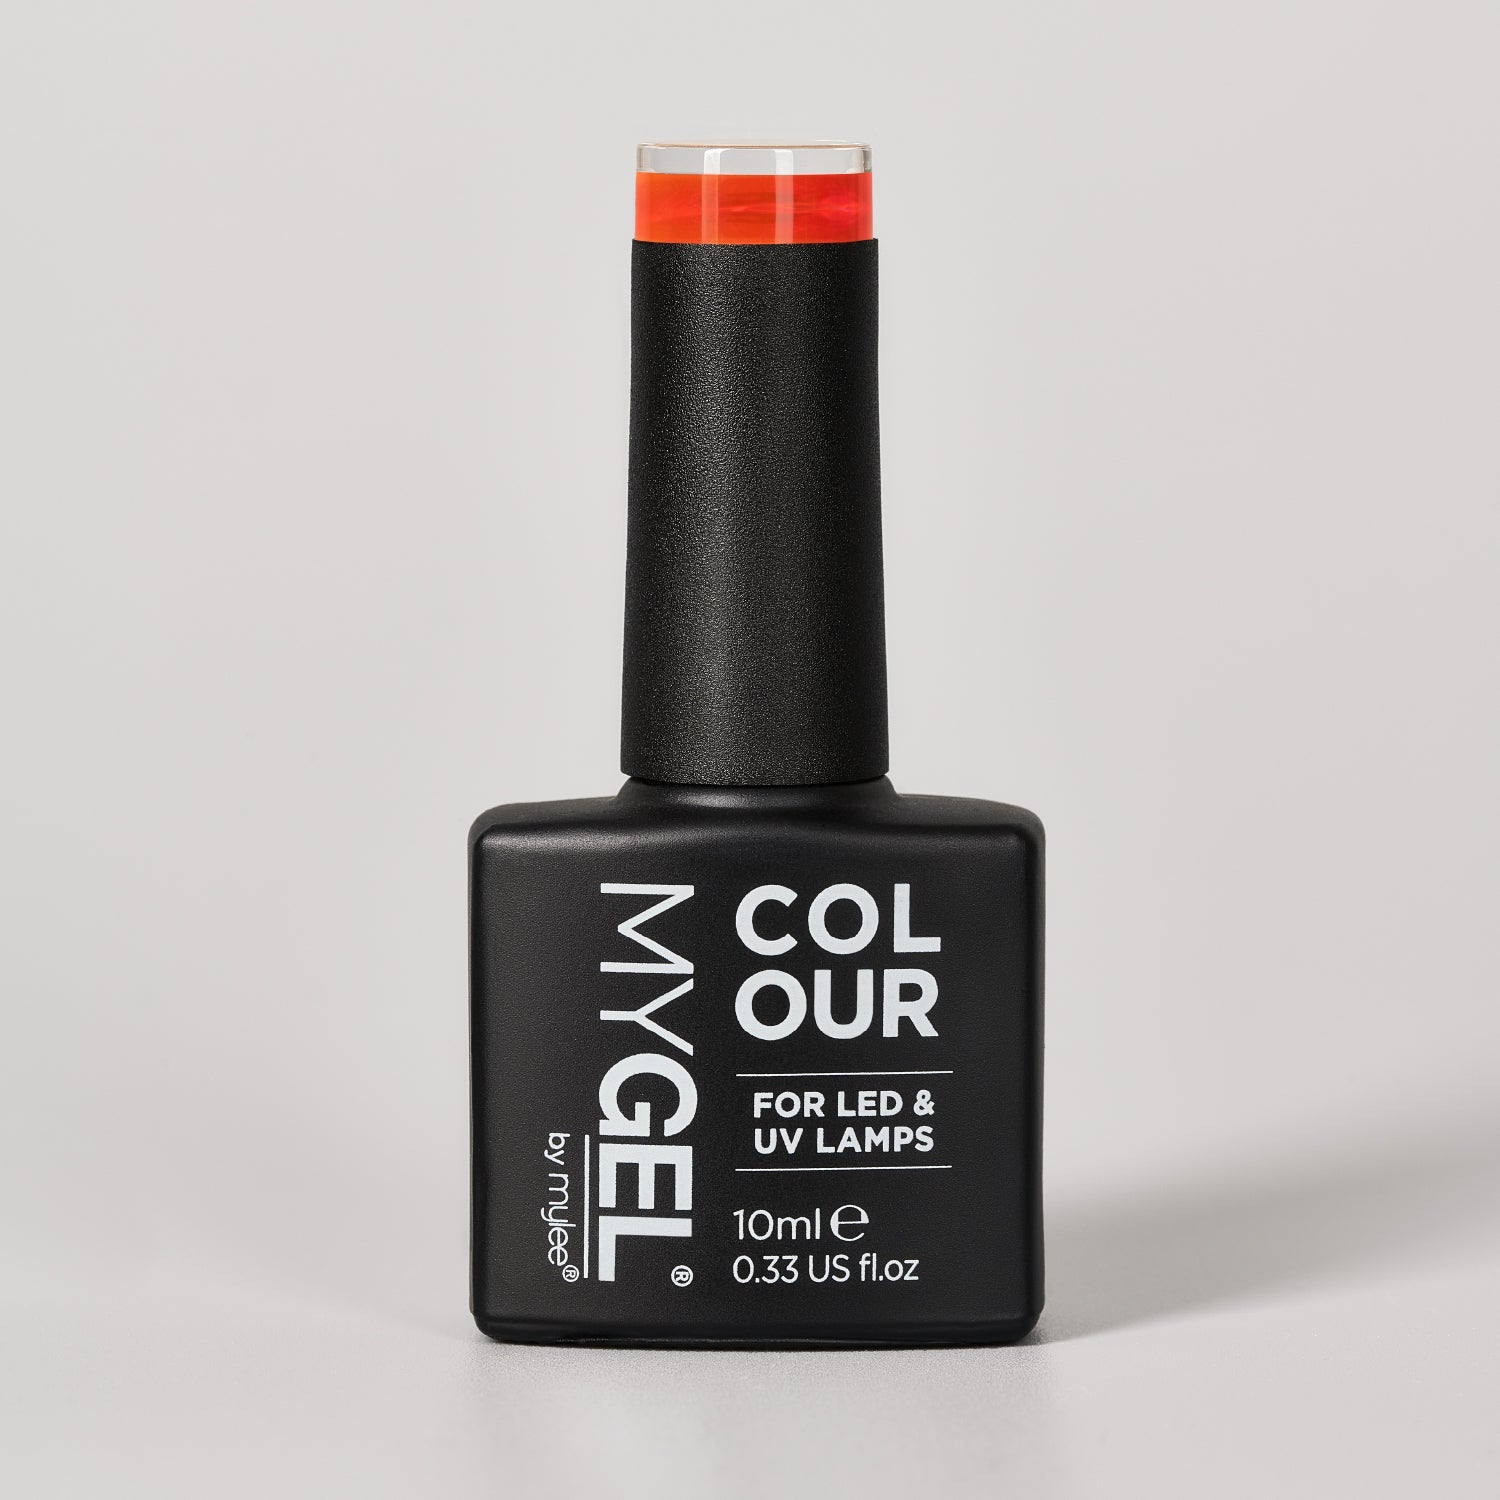 Image of Mylee New Flame LED/UV Orange Gel Nail Polish 10ml – Long Lasting At Home Manicure/Pedicure, High Gloss And Chip Free Wear Nail Varnish